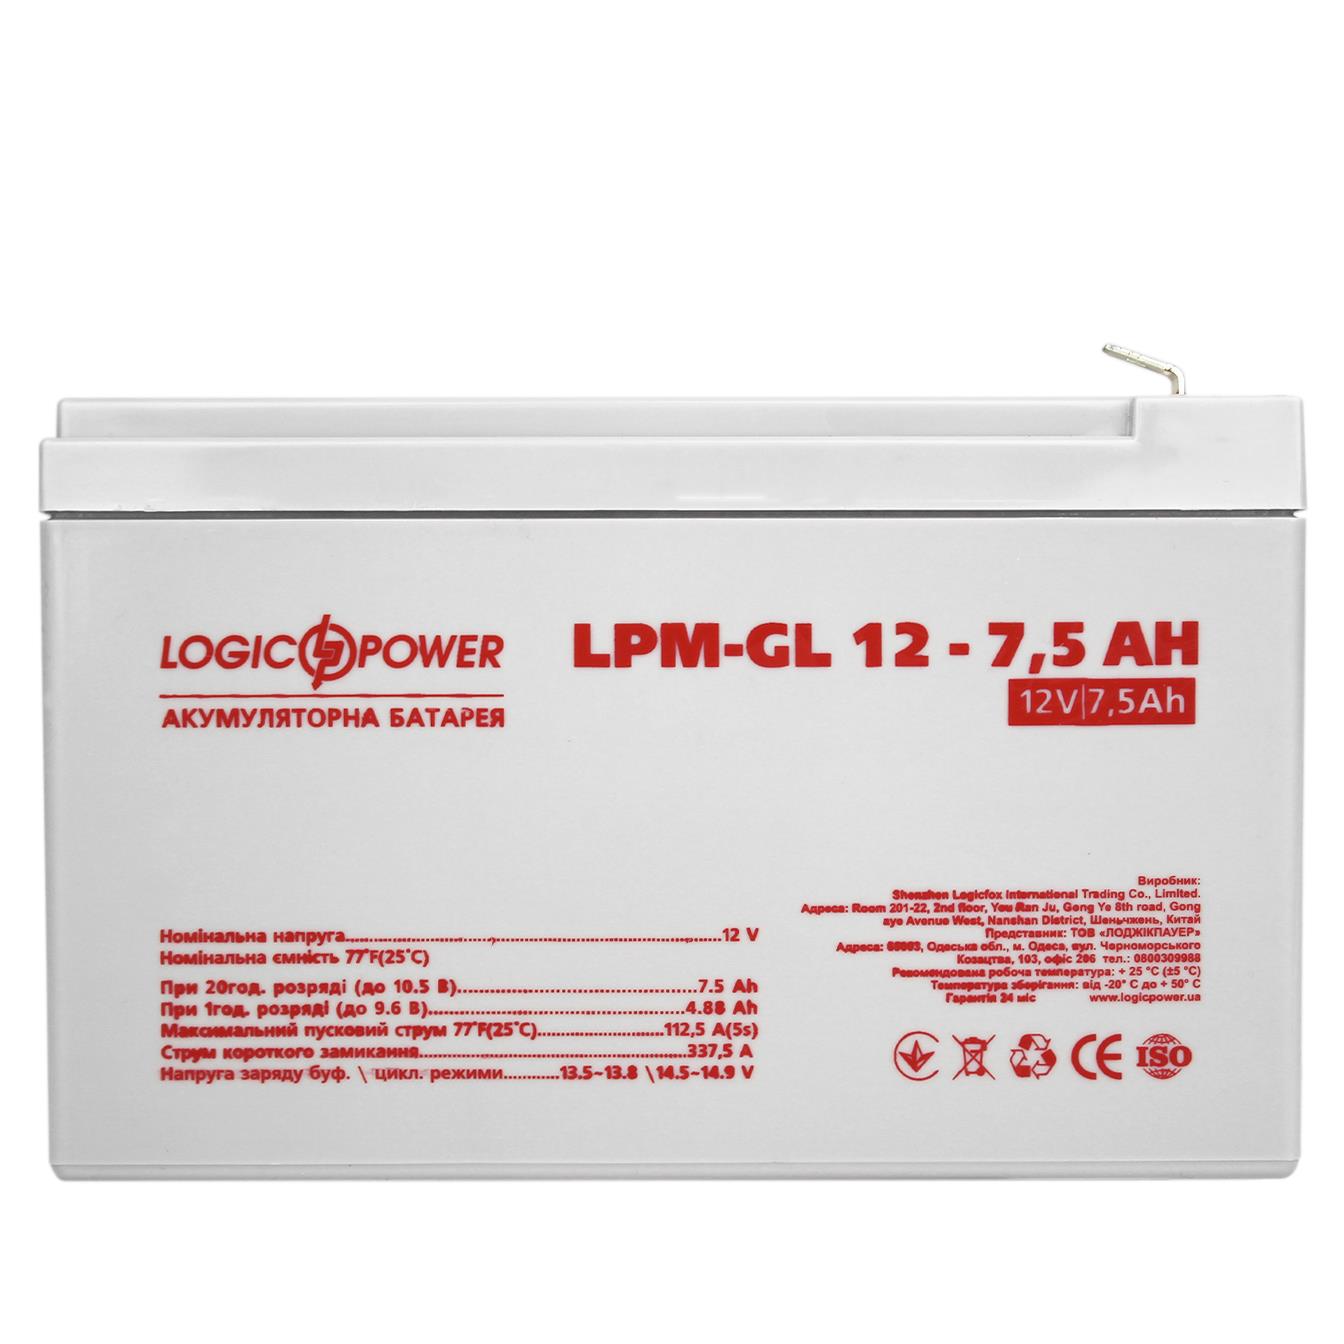 продаём LogicPower LPM-GL 12V - 7.5 Ah (6562) в Украине - фото 4